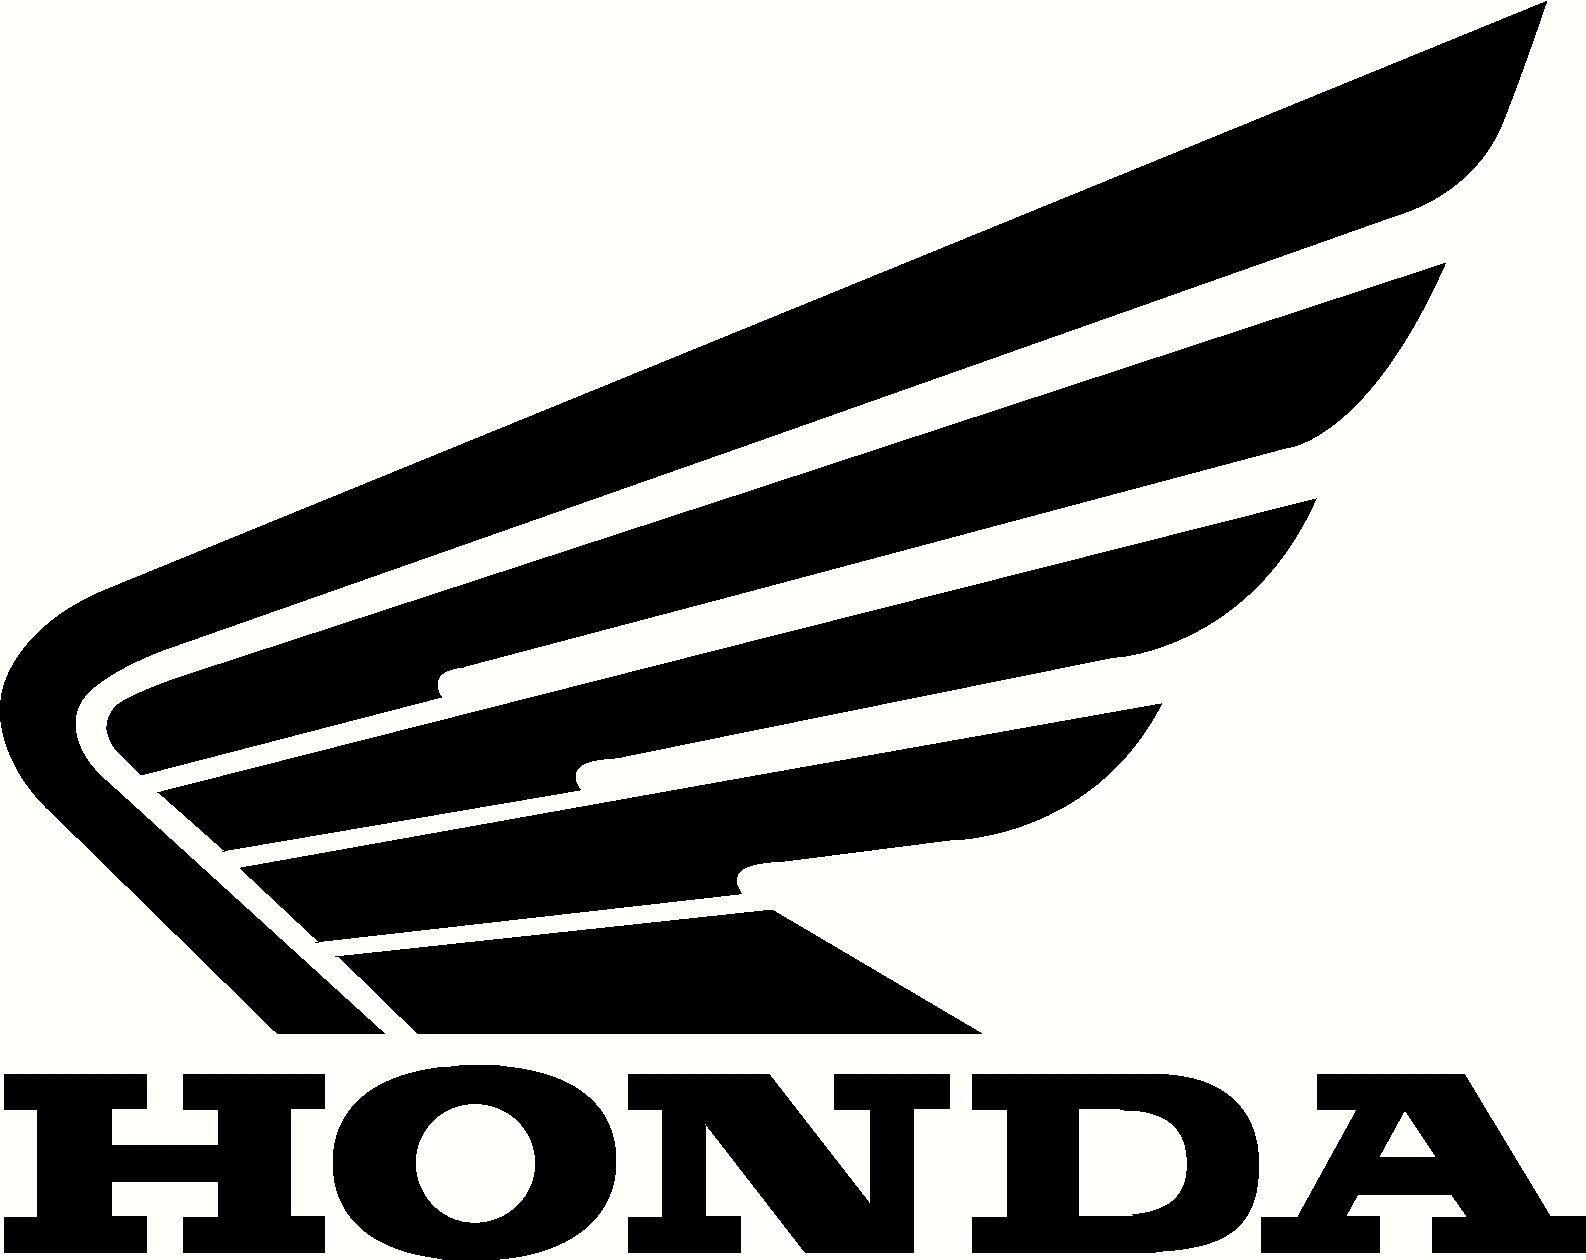 Honda ATV Logo - Pin by Ross Robinson on motorcycles logos | Pinterest | Motorcycle ...